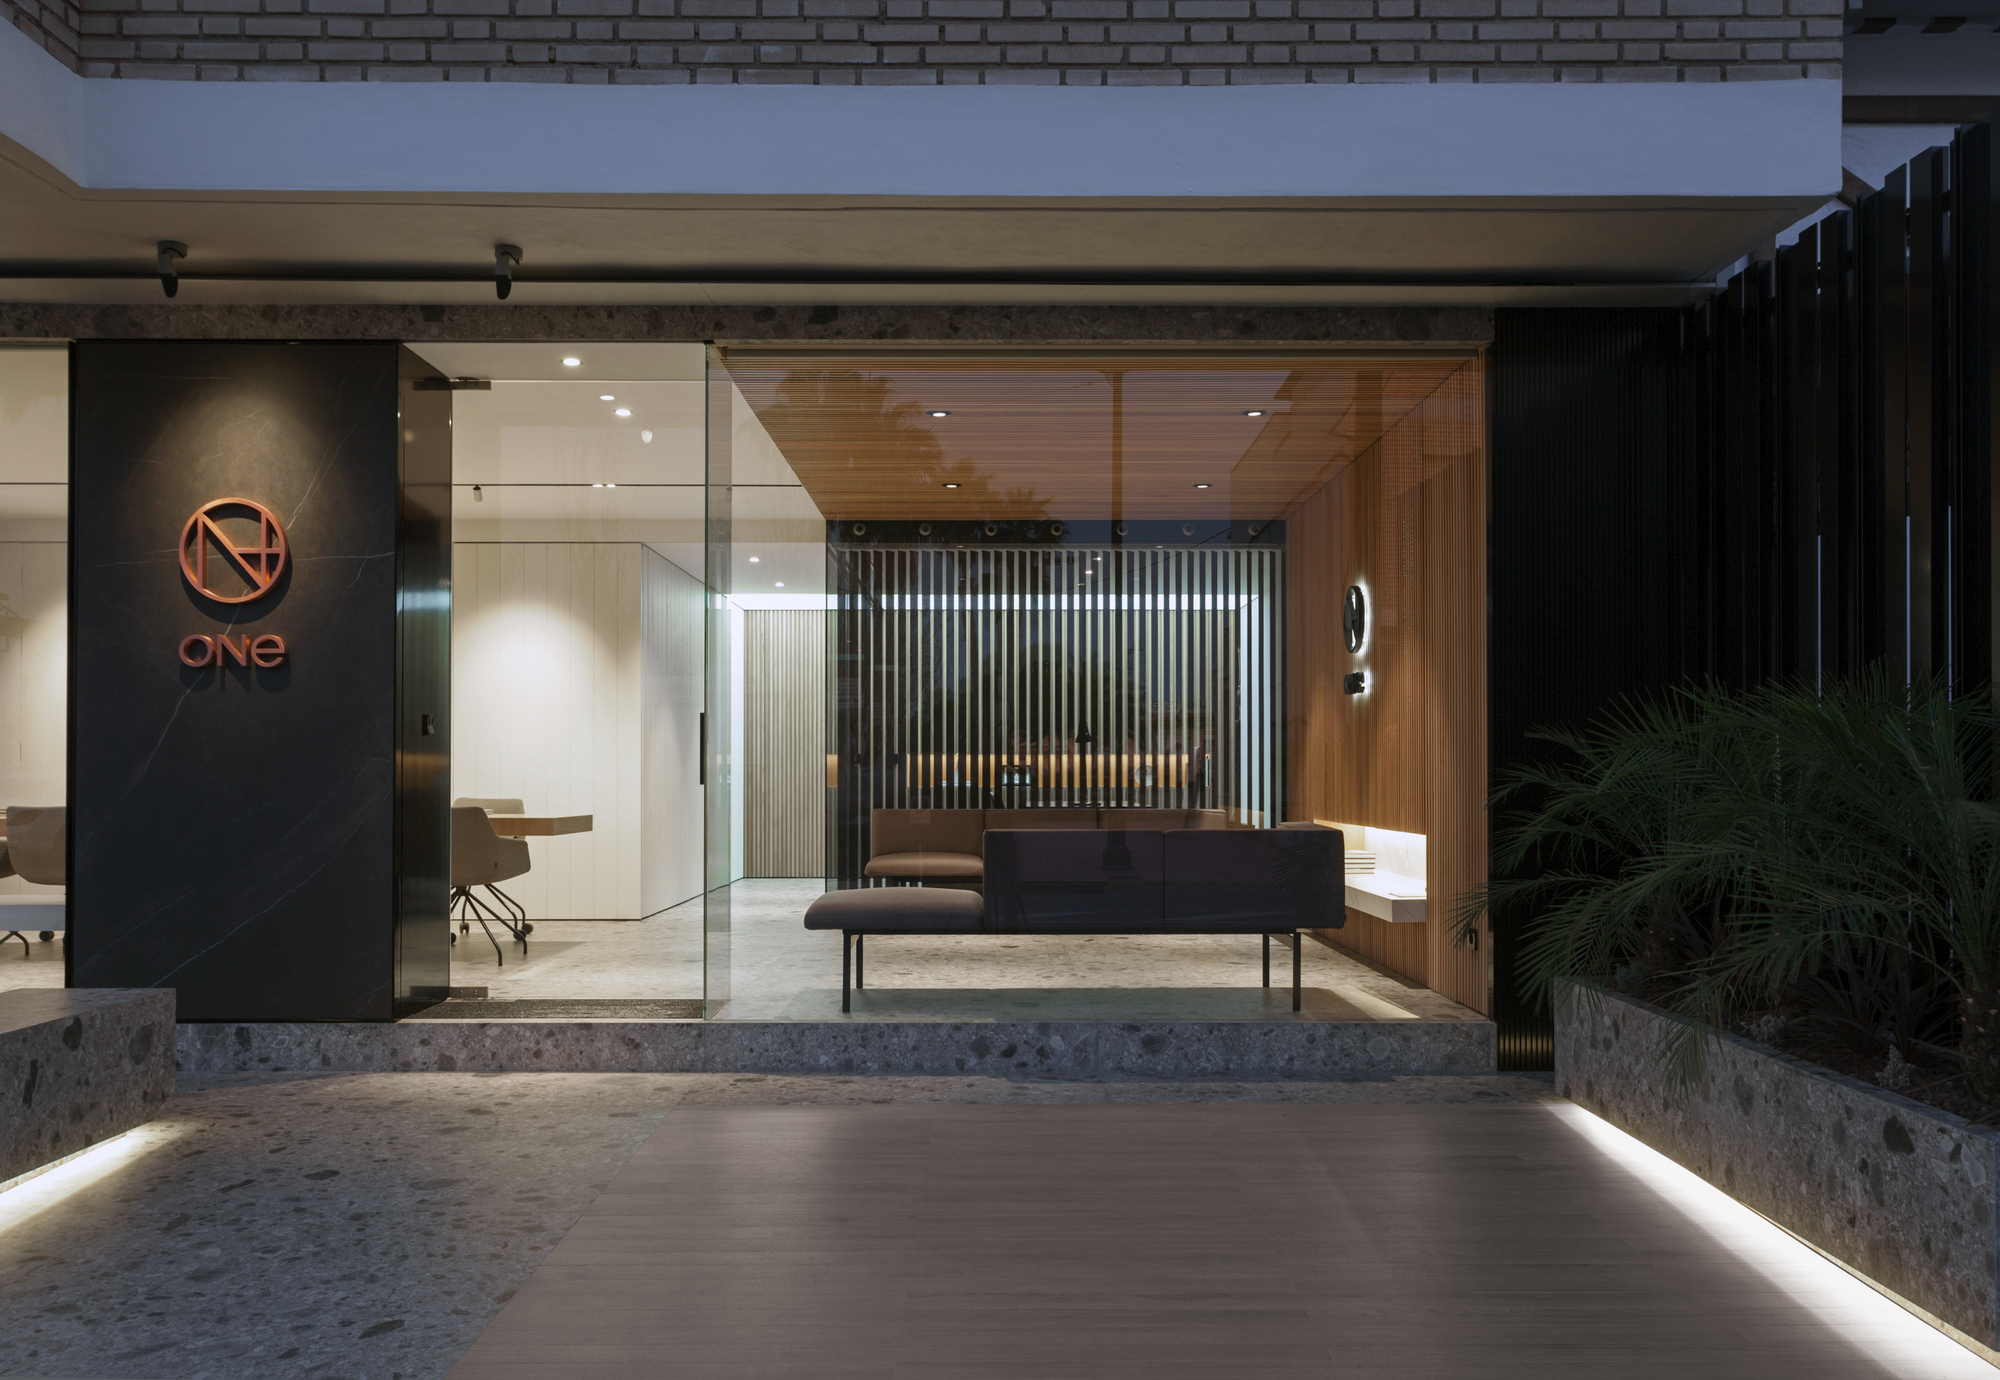 Allinone房地产集团办公室-穆尔西亚|ART-Arrakis | 建筑室内设计的创新与灵感